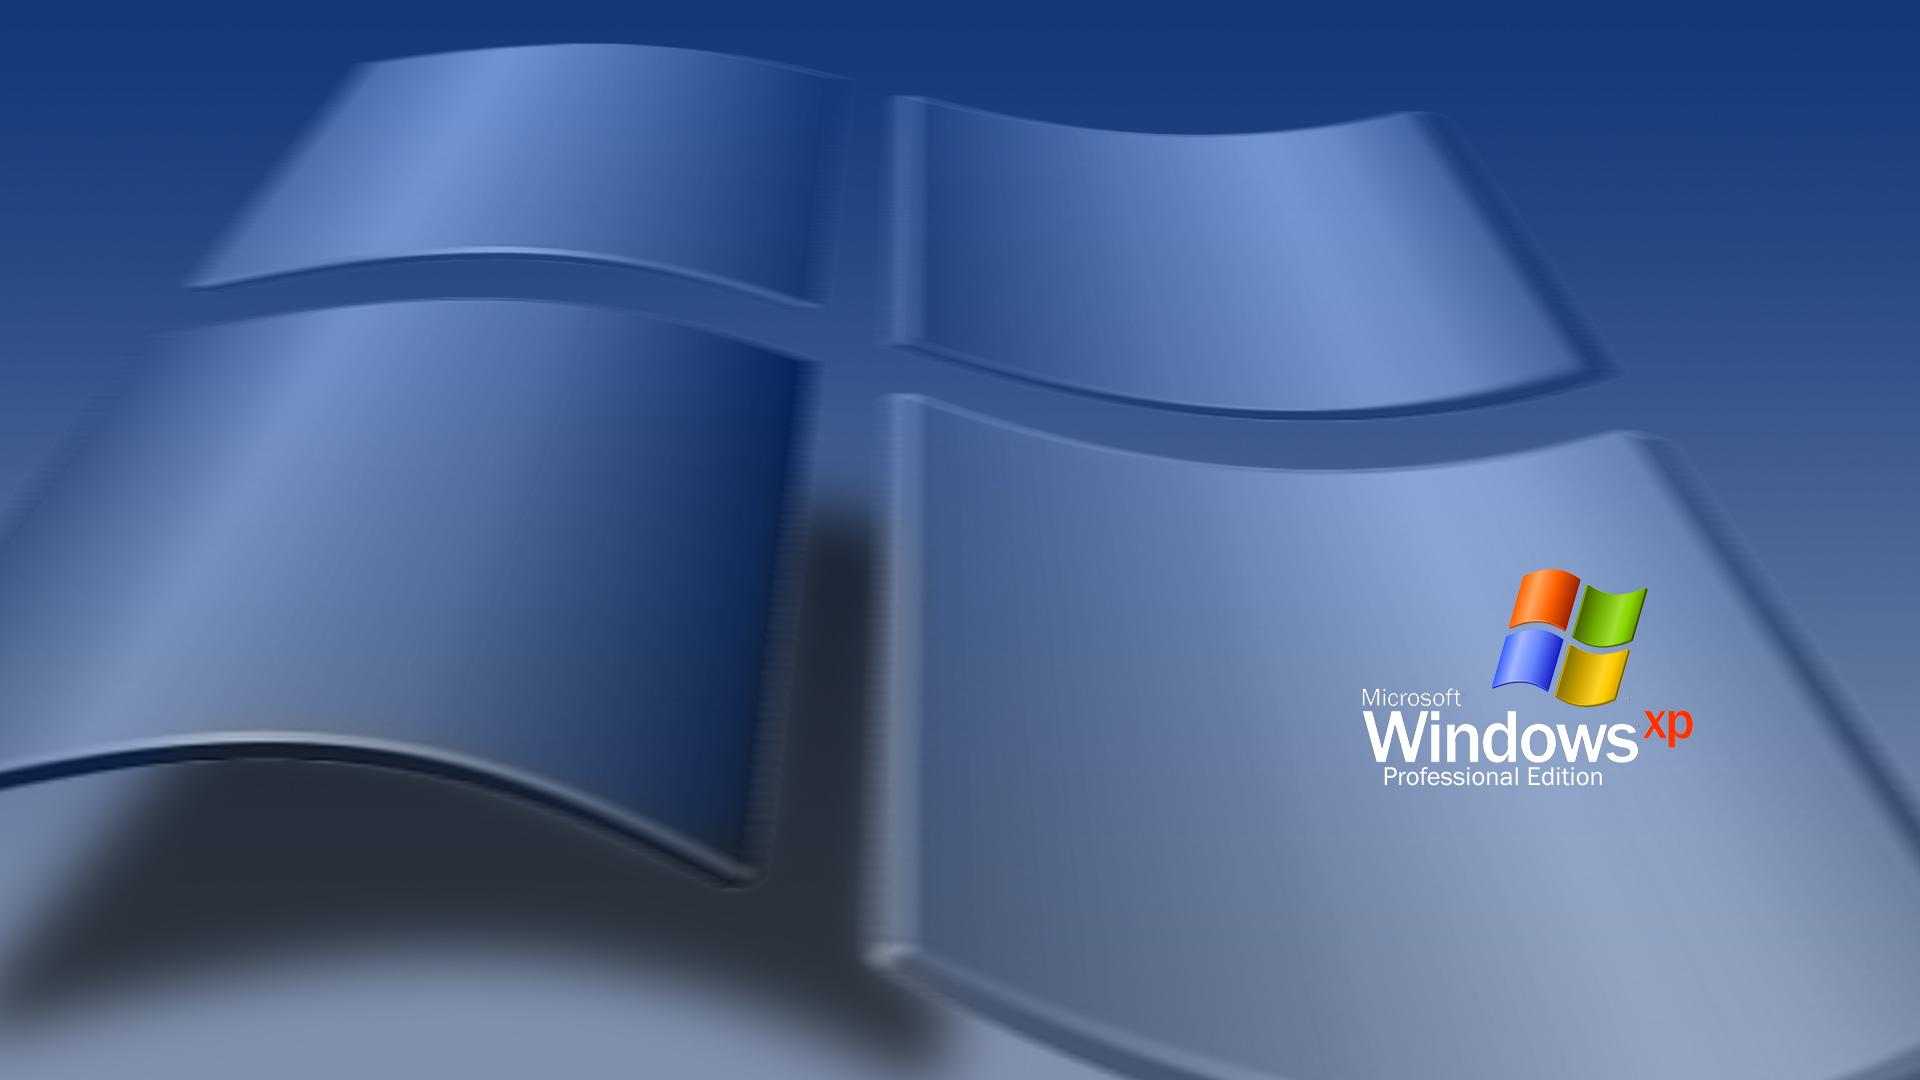 Windows XP Professional Wallpaper Free Windows XP Professional Background